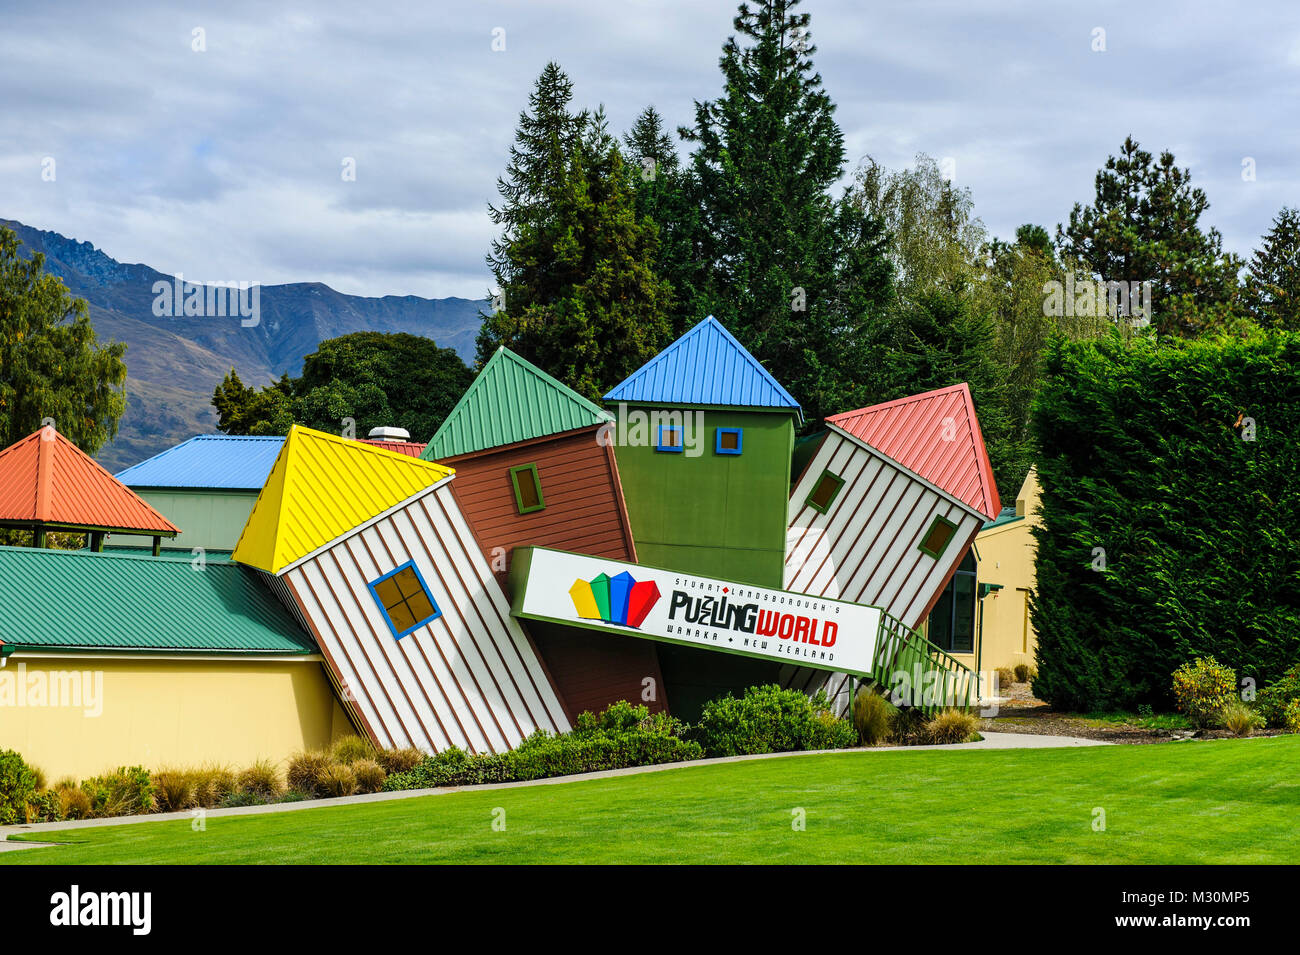 Puzzling world, Wanaka, South Island, New Zealand Stock Photo - Alamy